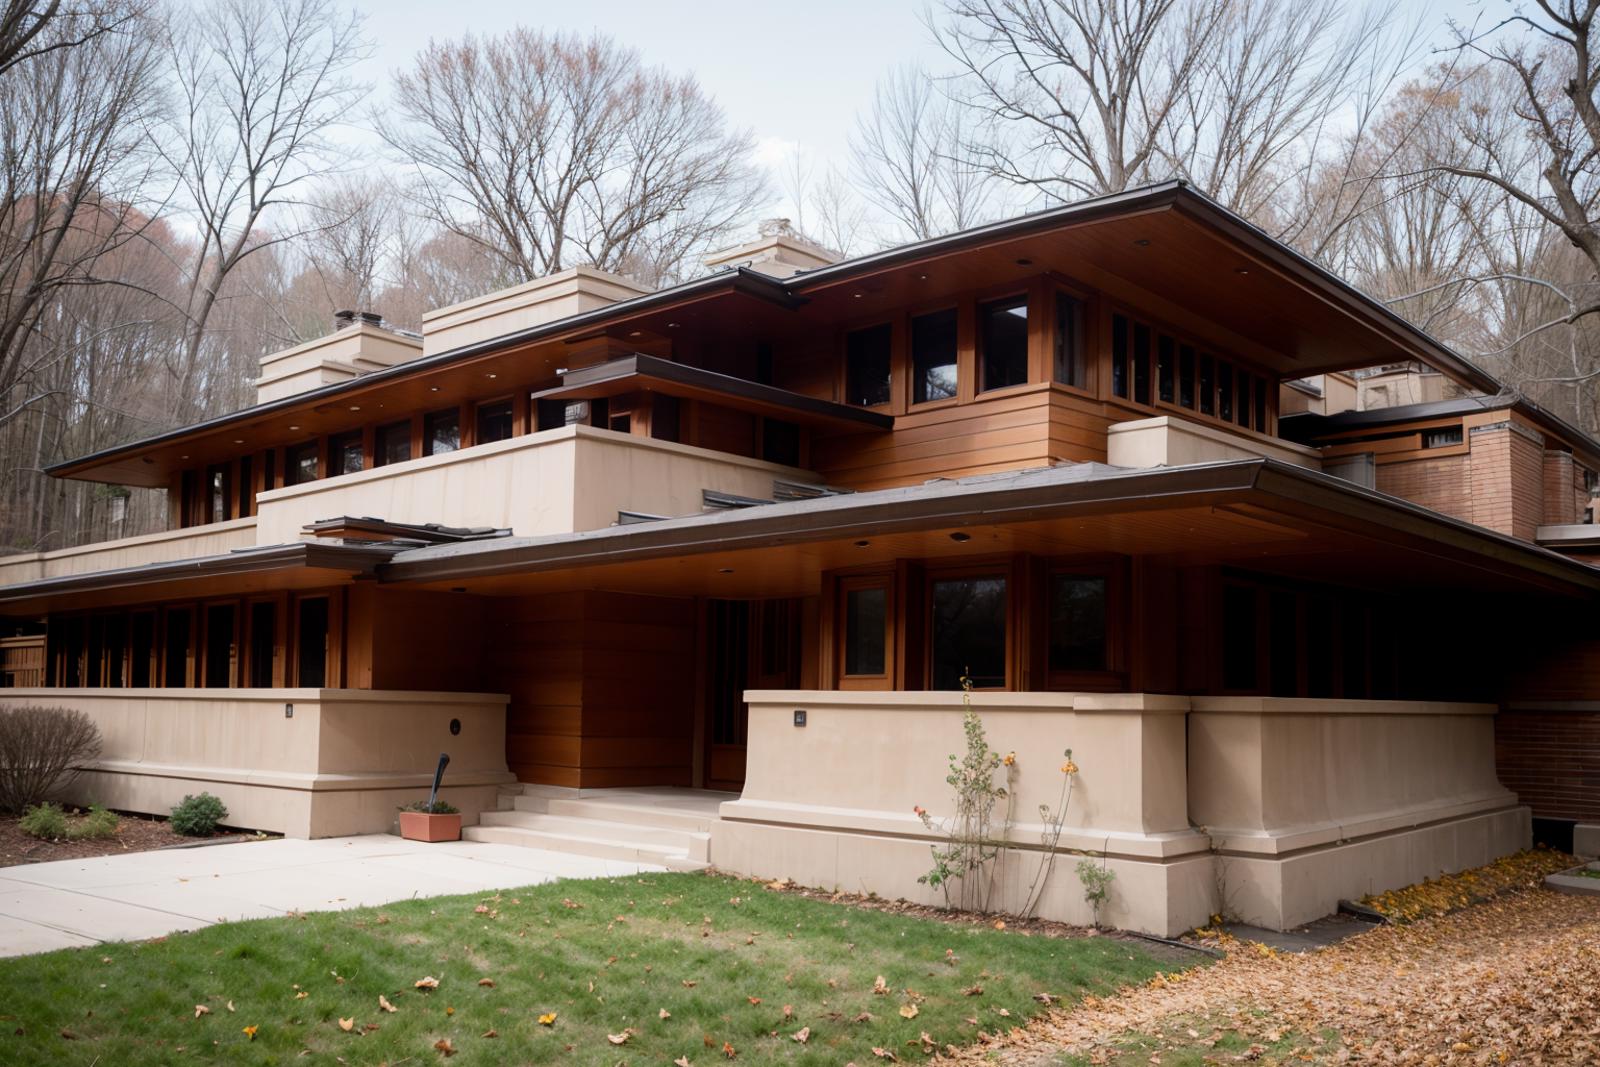 Frank Lloyd Wright Style Architecture image by thorenx1706632